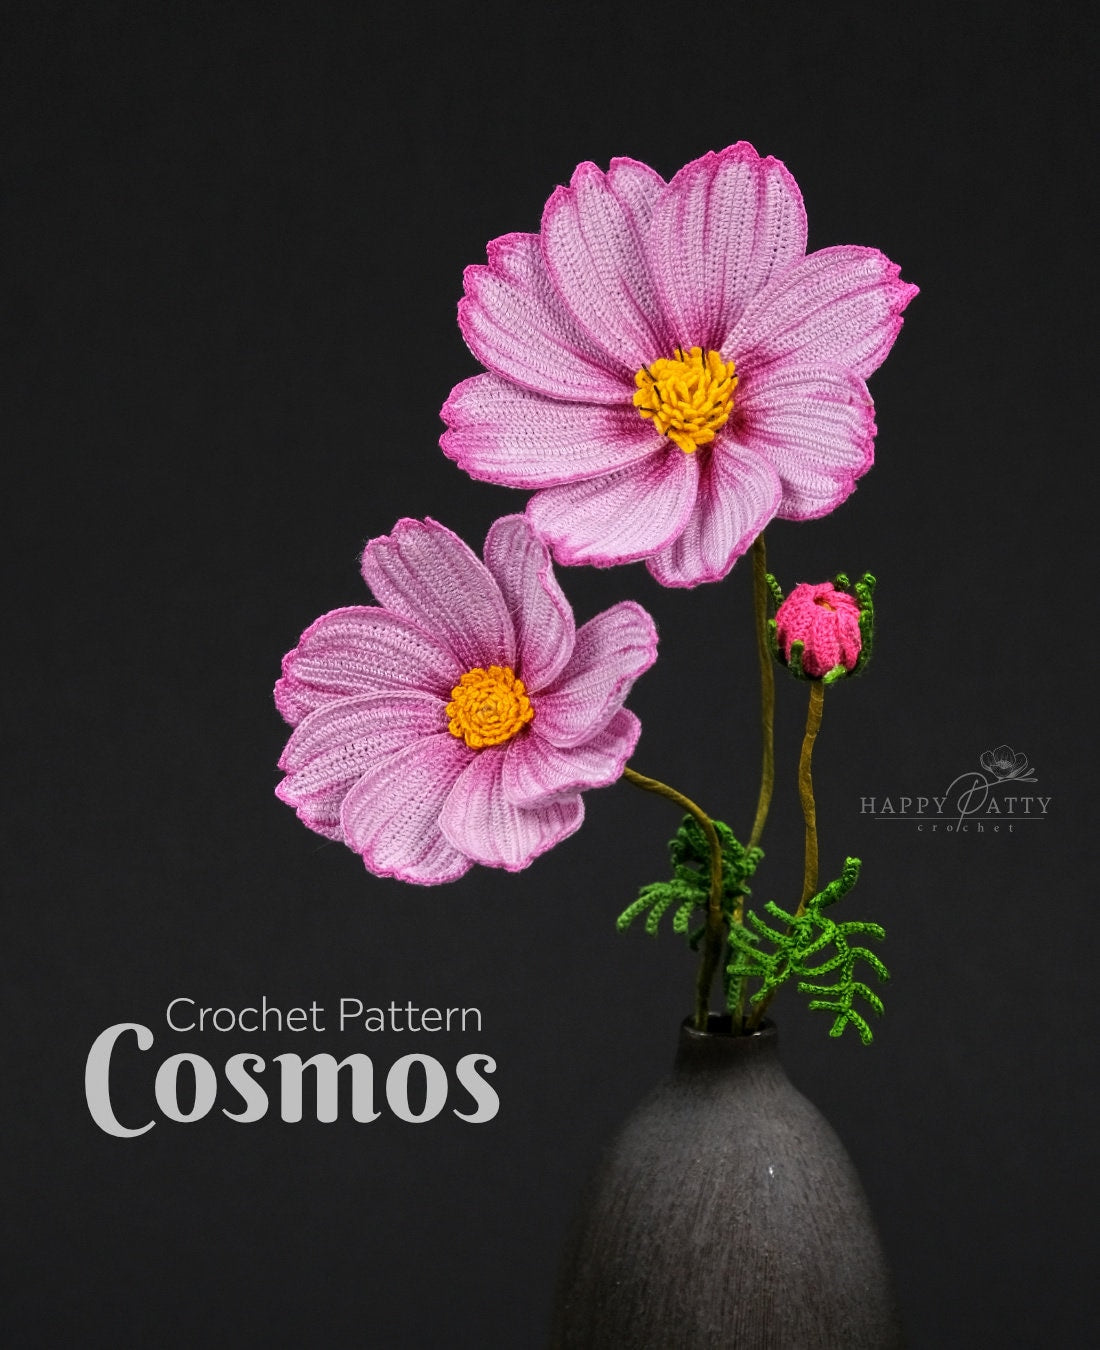 Crochet Pattern for a Cosmos Flower - Crochet Flower Pattern for a Cosmos Flower